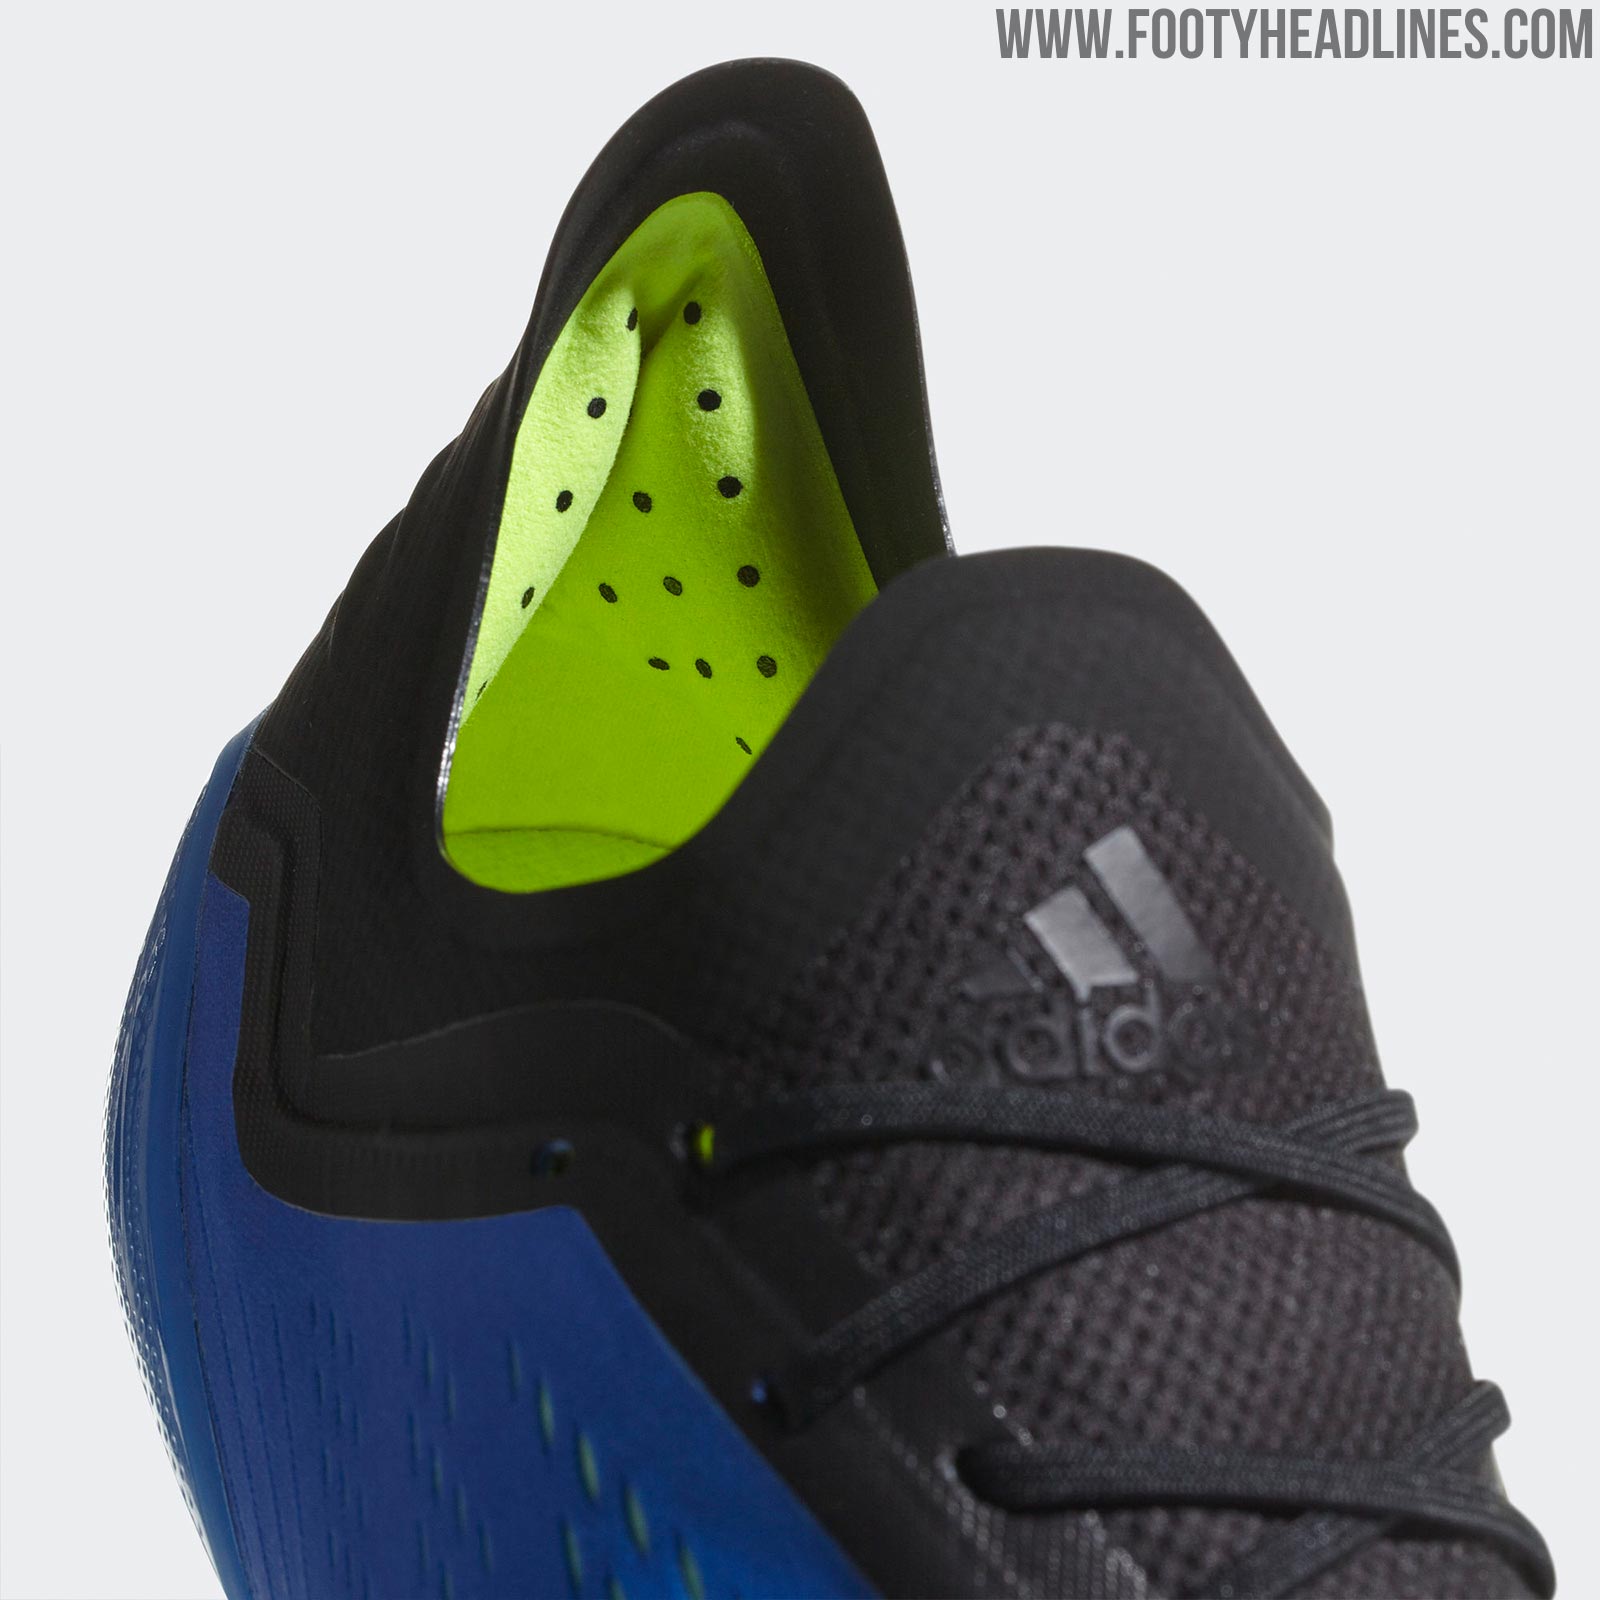 All-New Next-Gen Adidas X 18.1 'Energy Mode' 2018 World Cup Boots ...